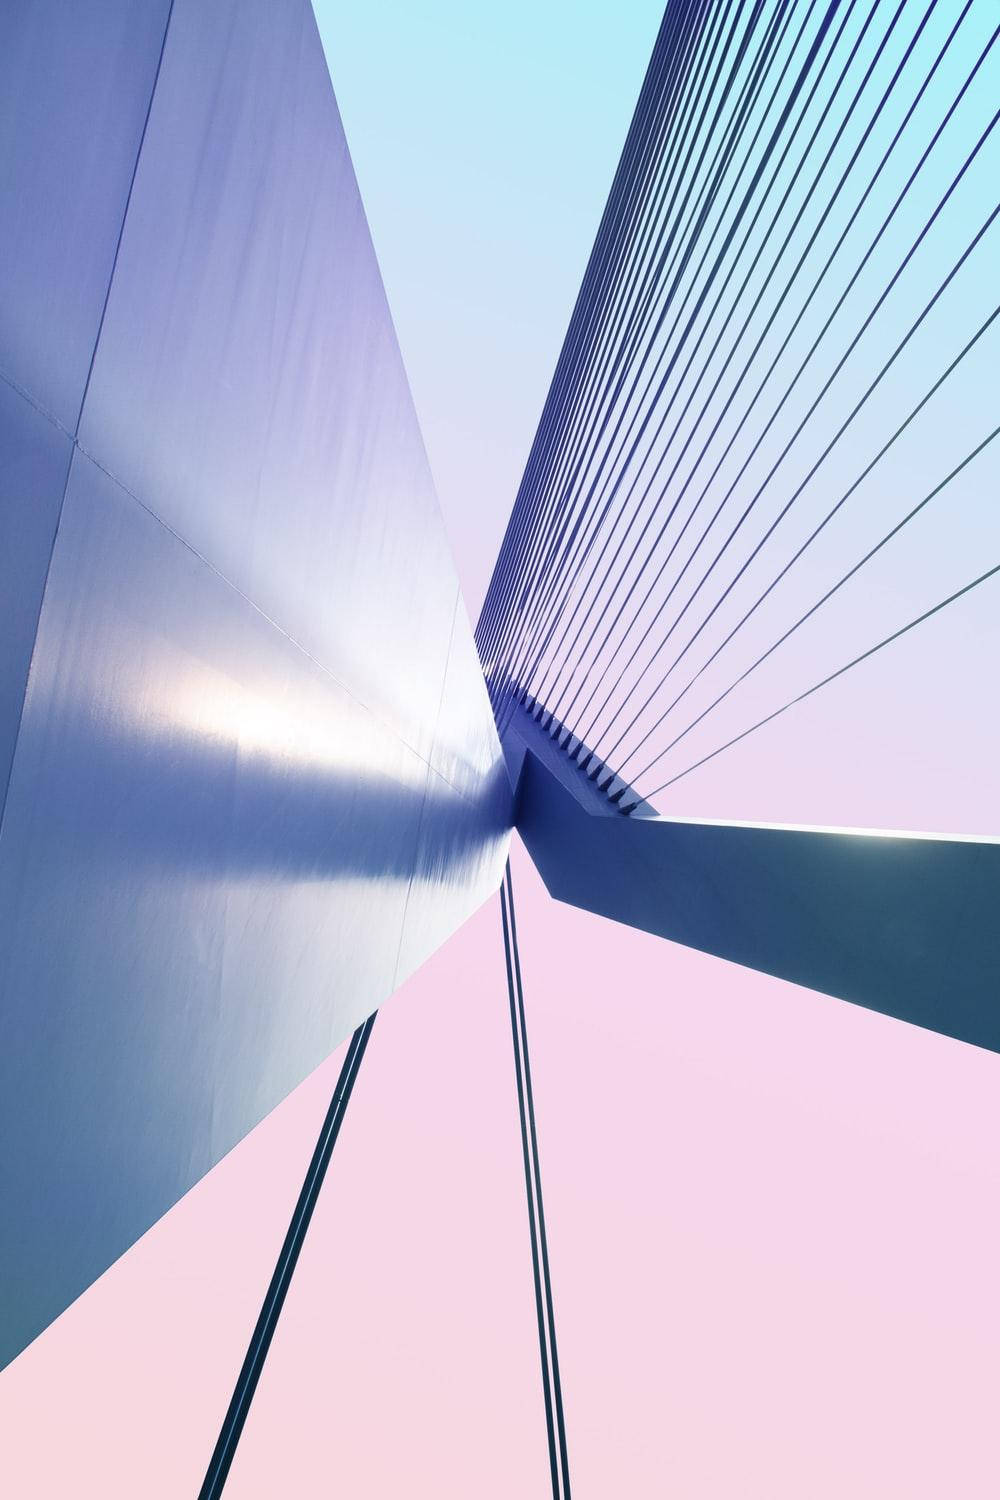 Cool Iphone Xs Max Bridge Architecture Wallpaper